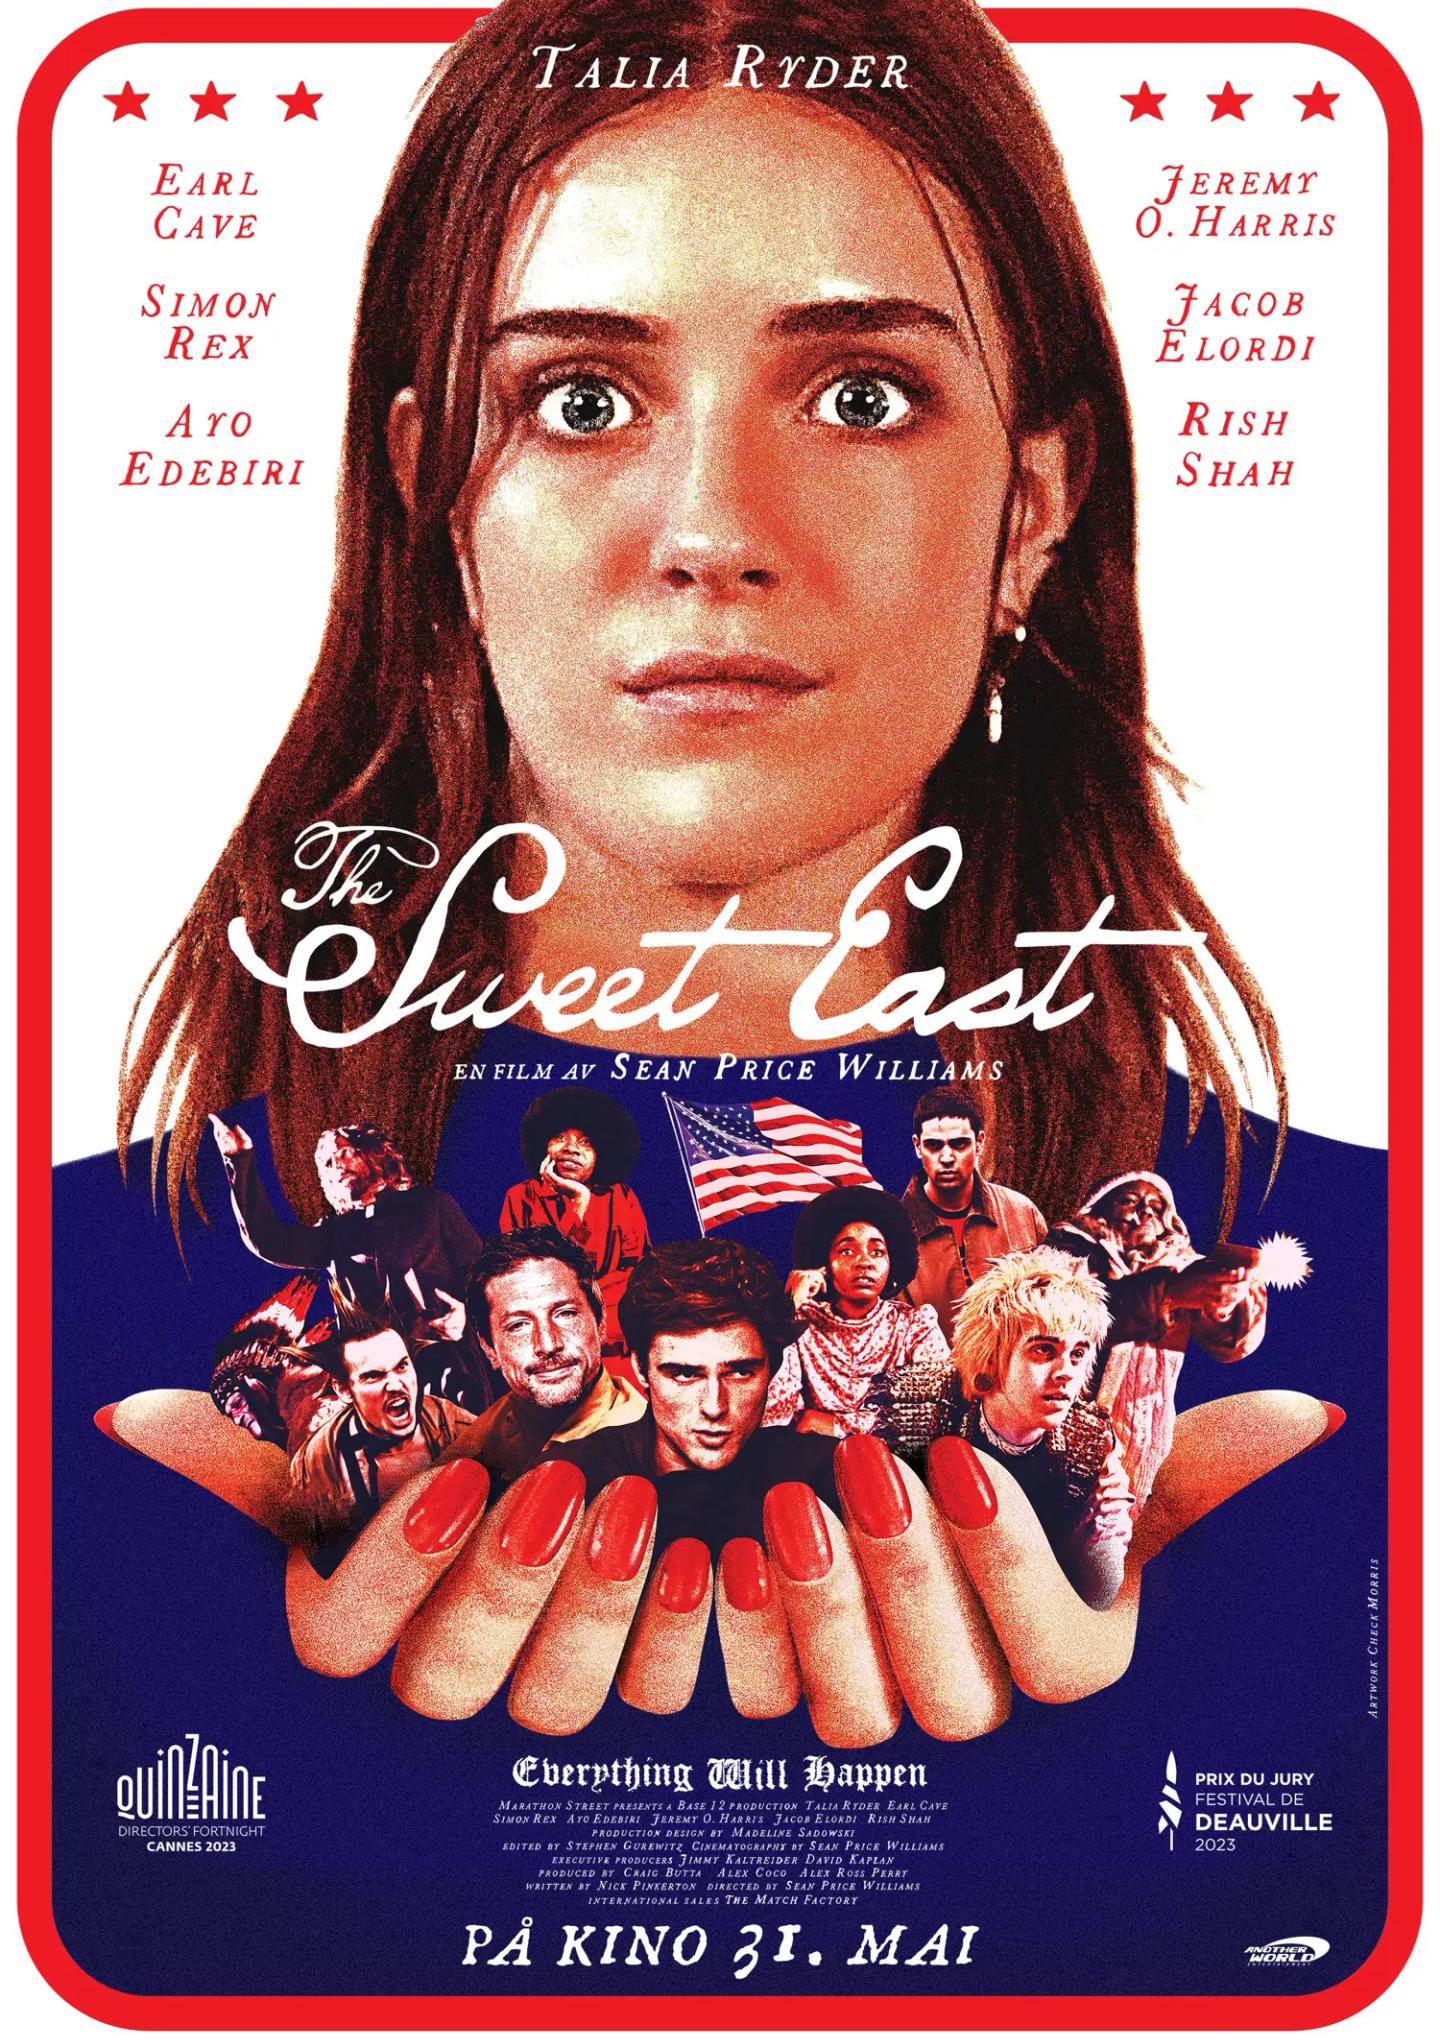 Plakat for 'The Sweet East'